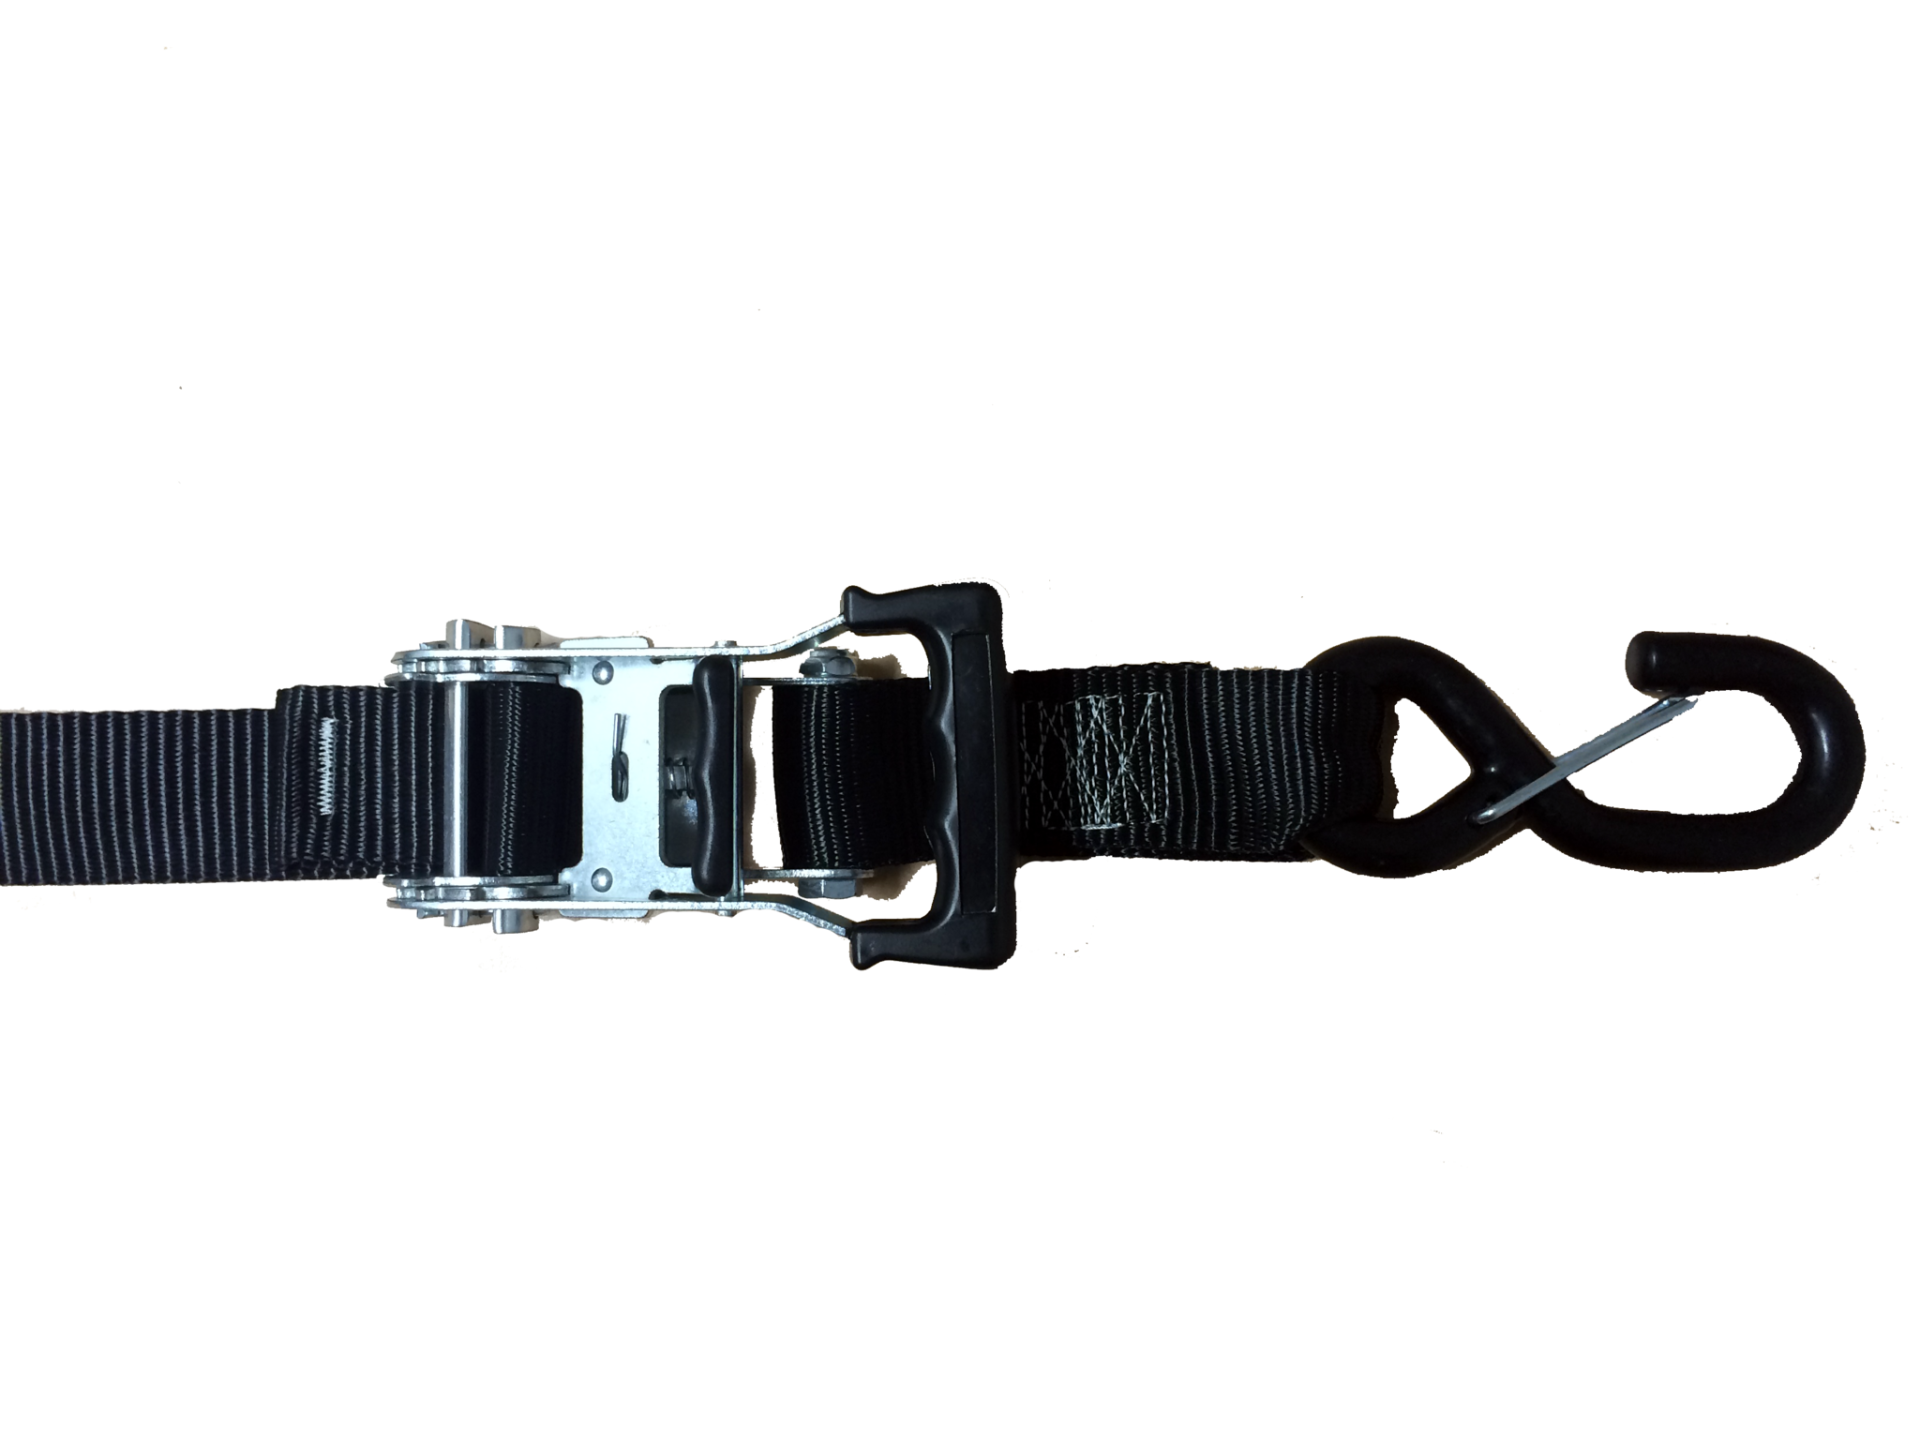 1 x 15' Ratchet Tie Down Hook 1000 Ib 1 wide nylon webbing strap Kay —  AllTopBargains